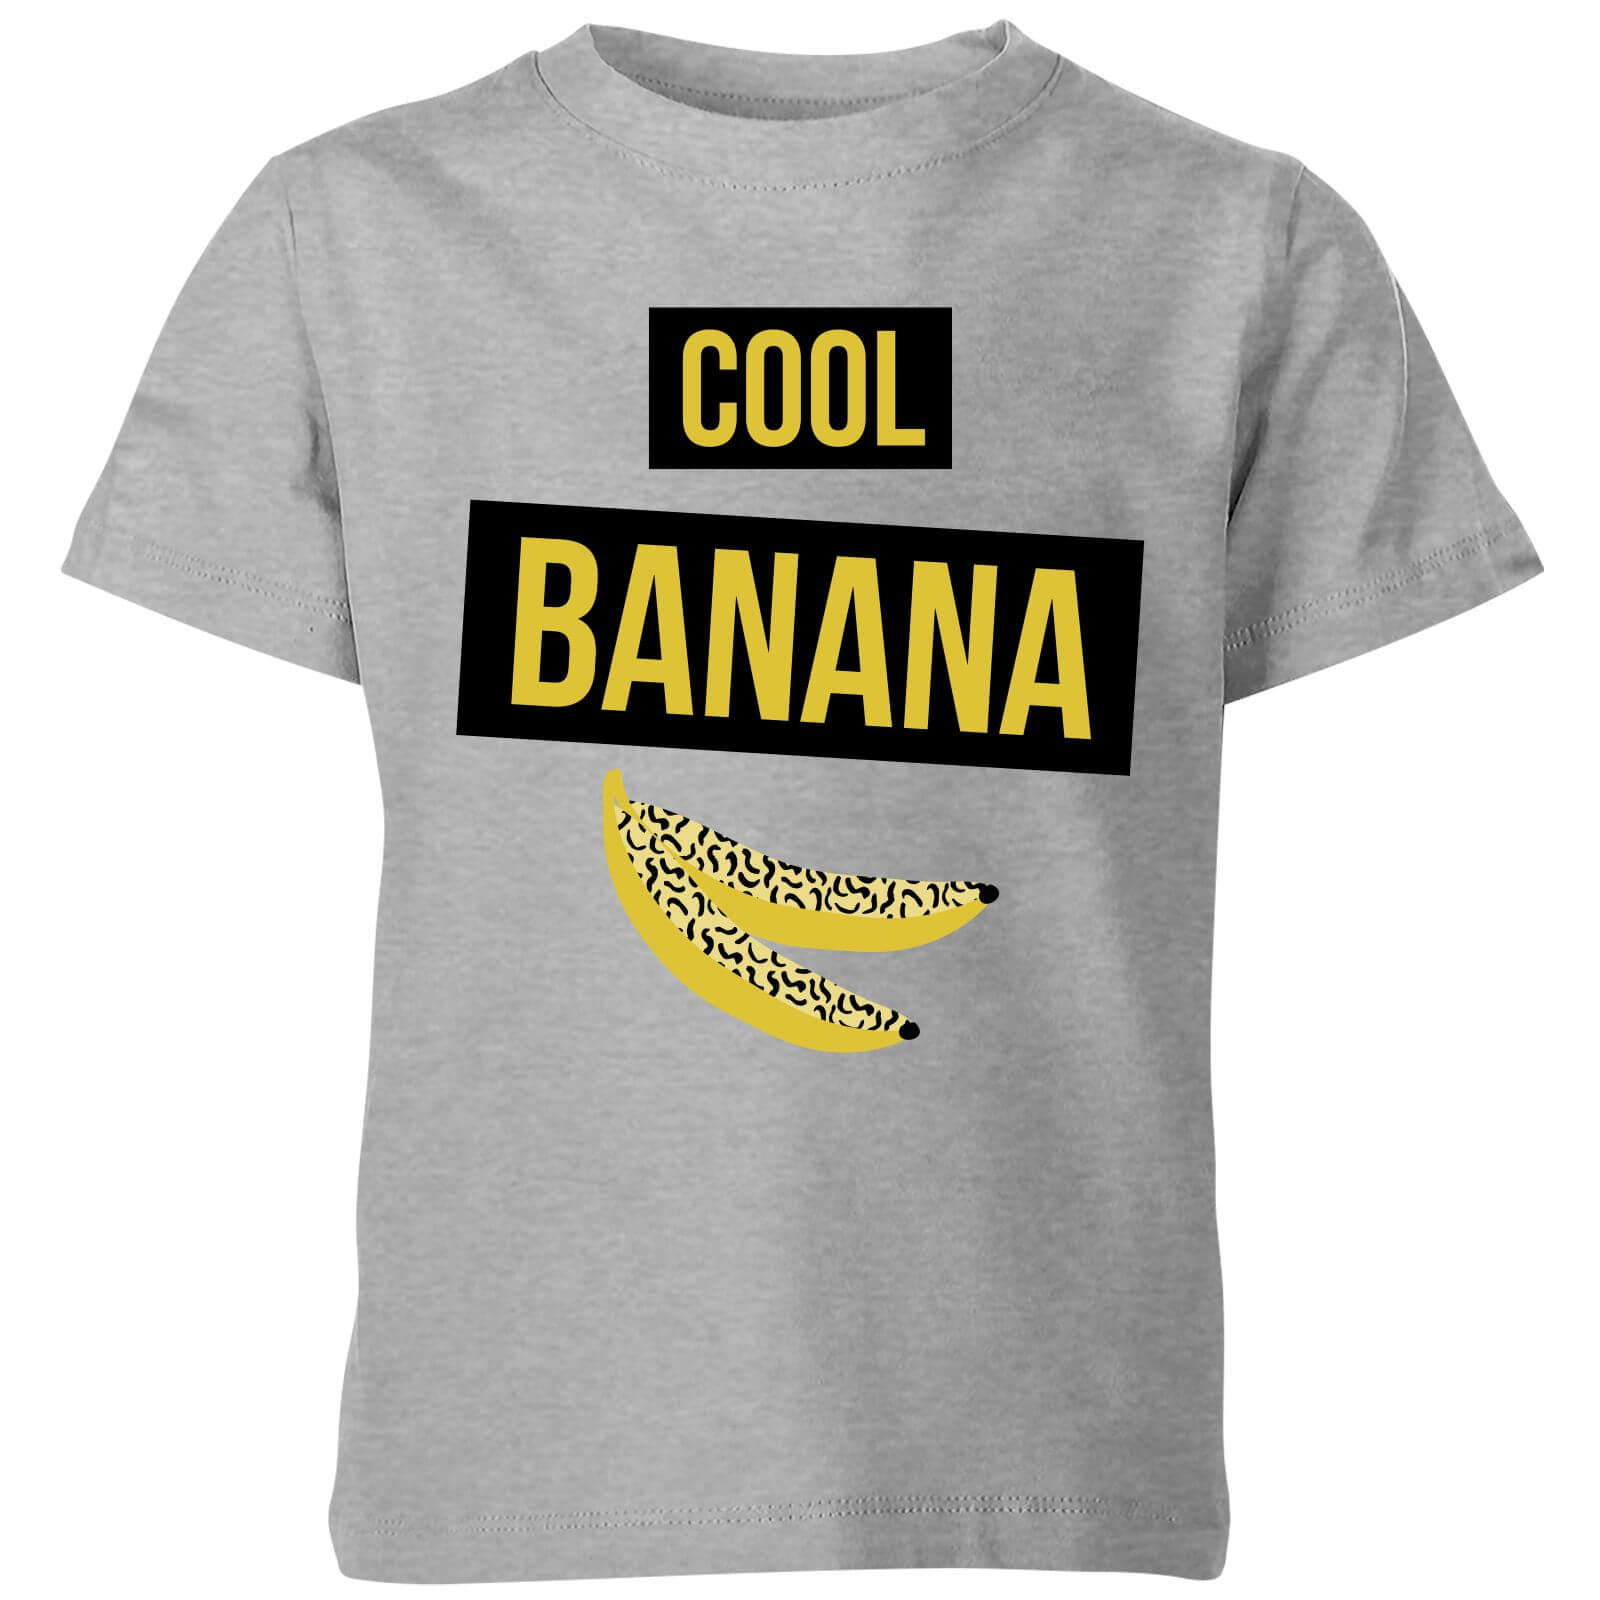 My Little Rascal Cool Banana Kids' T-Shirt - Grey - 3-4 Years - Grey